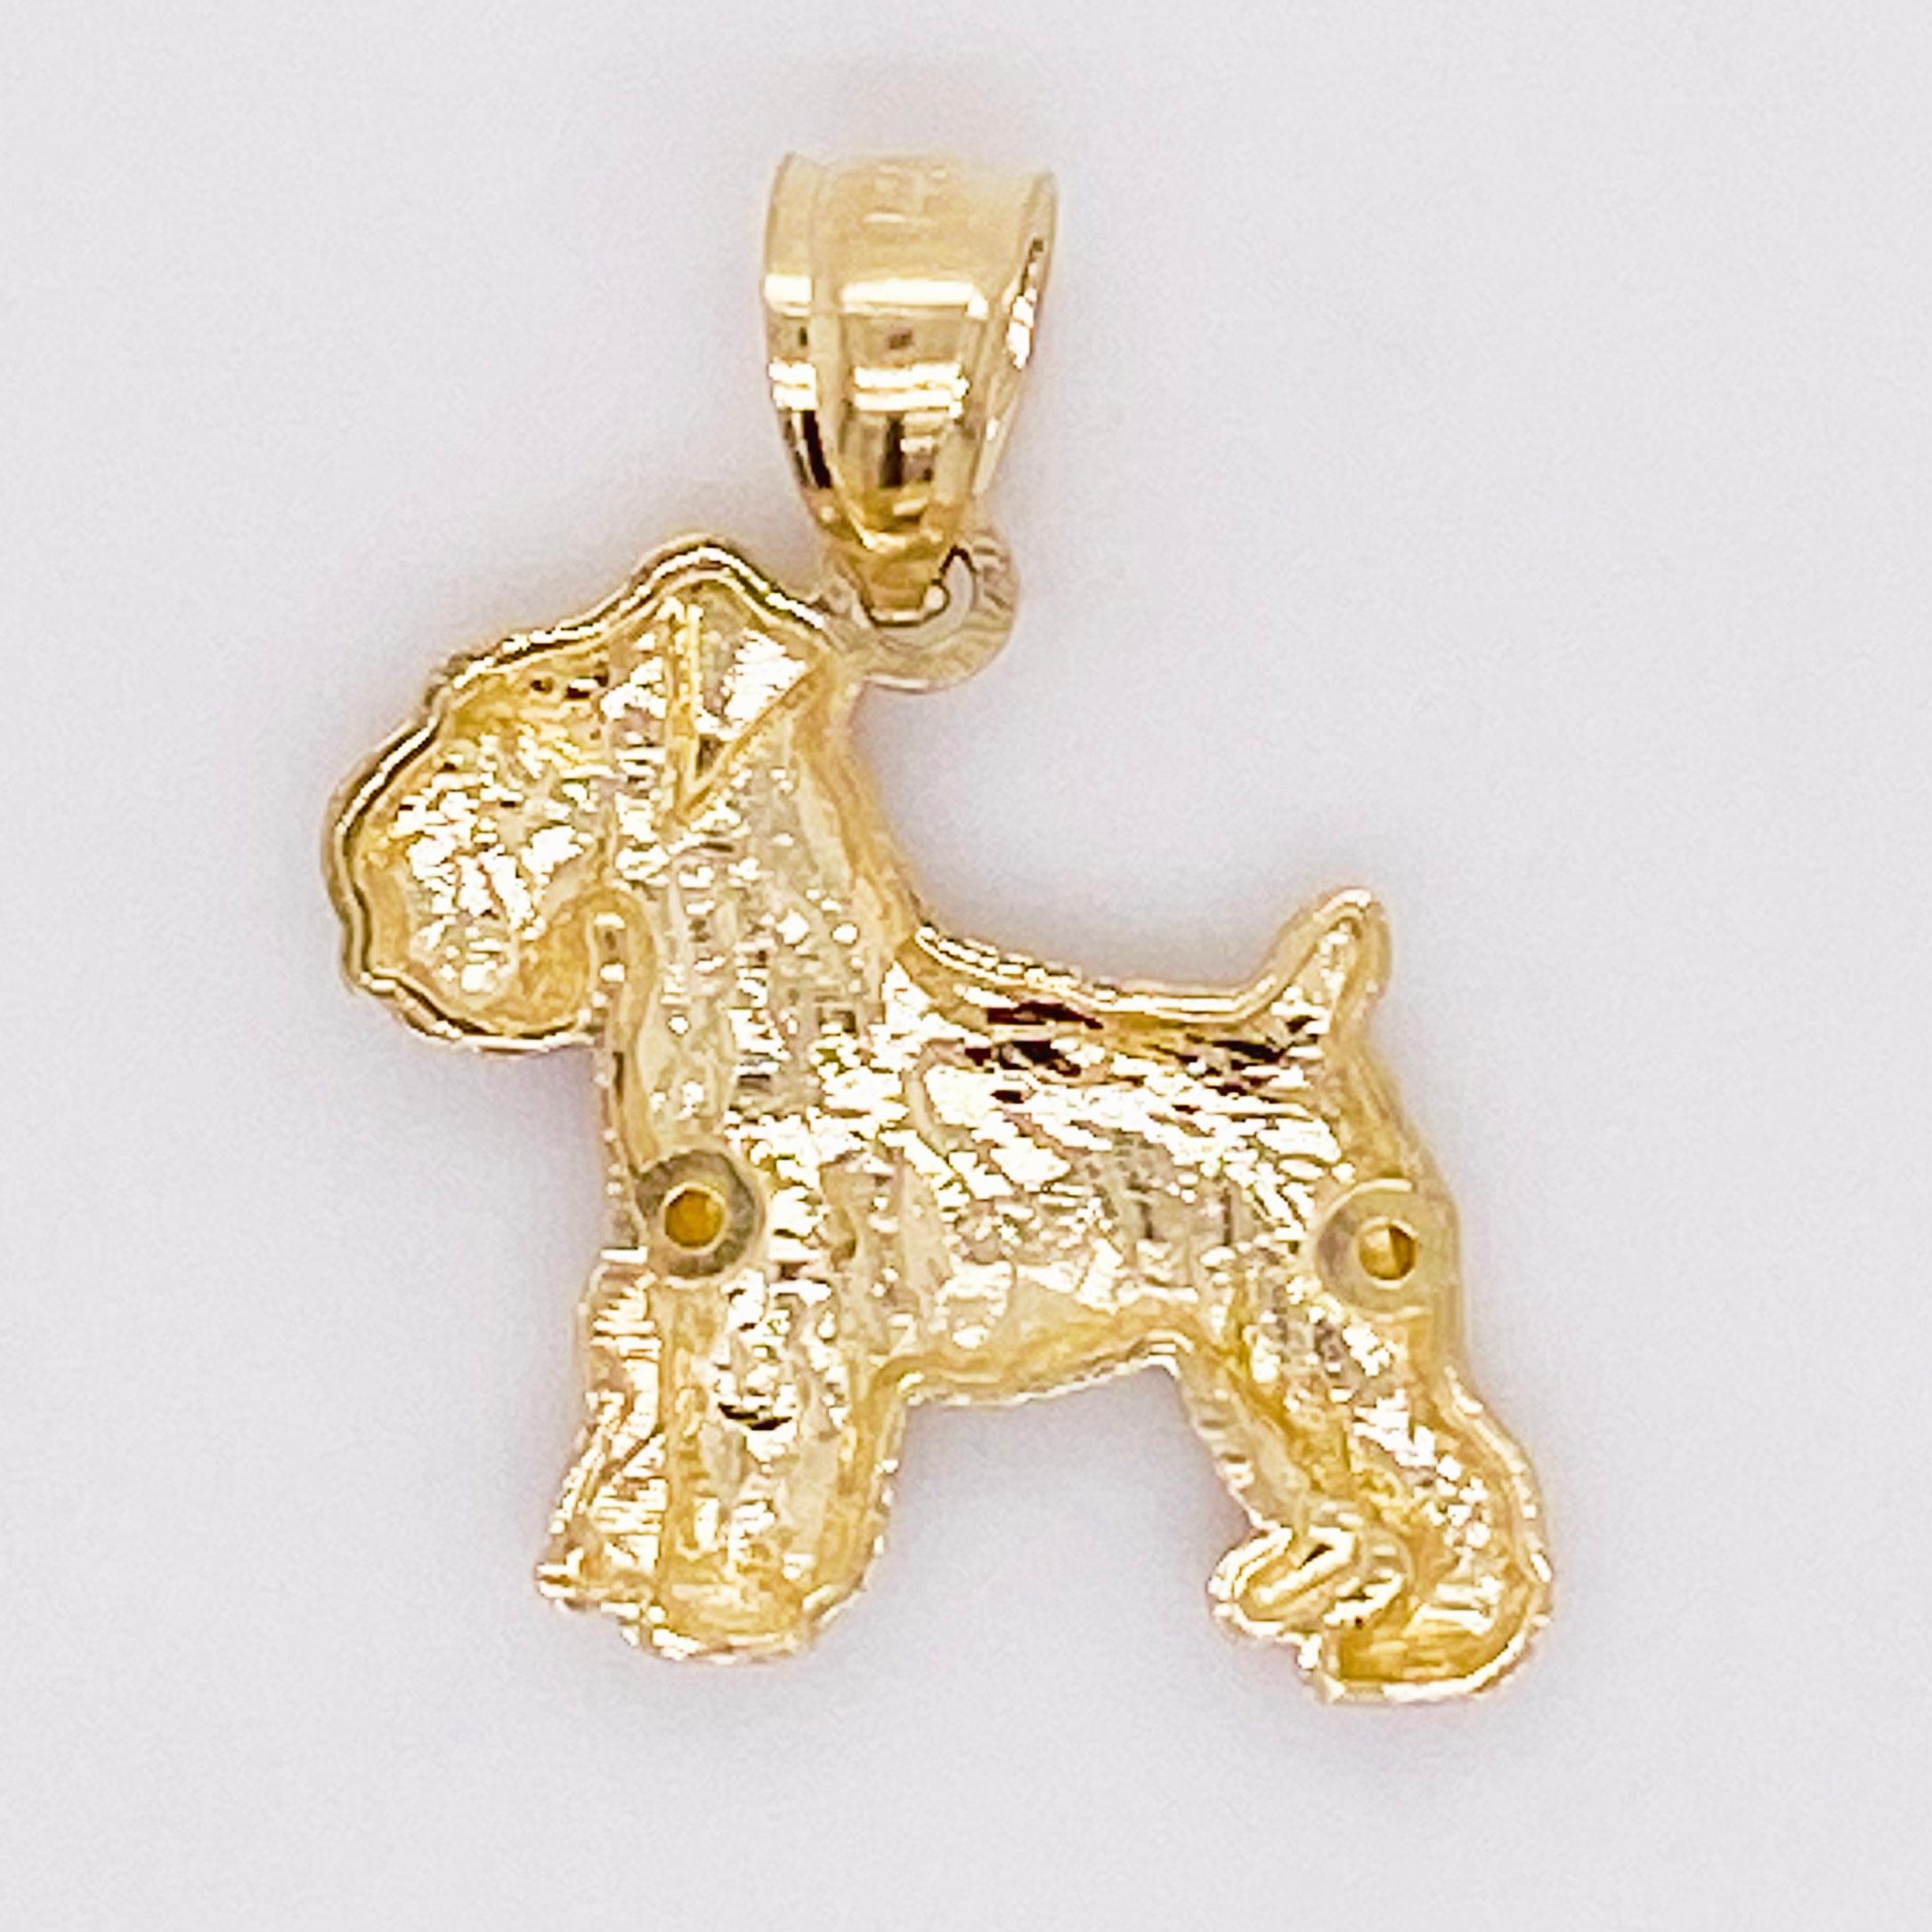 Modern Schnauzer Dog Pendant, 14 Karat Yellow Gold, Dog Necklace, Pet Jewelry, Animal